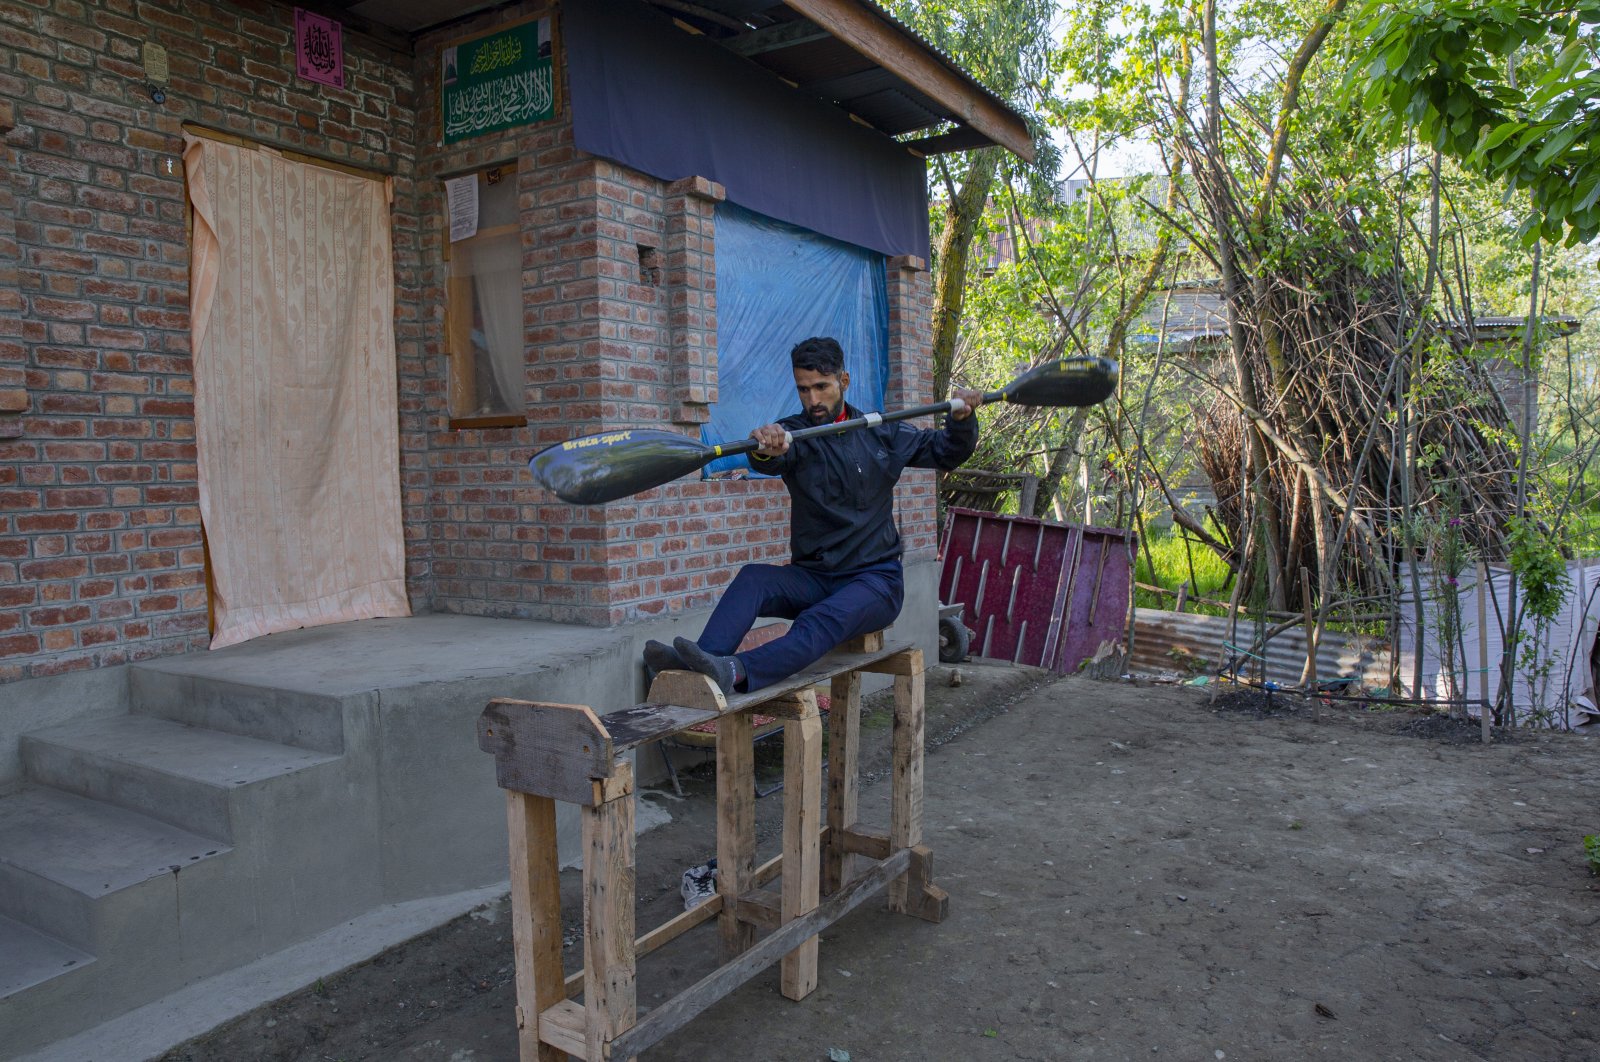 Kayaker Vilayat Hussain practices on a rugged under-construction wooden ergometer at his home, in Srinagar, Kashmir, April 24, 2020. (AP Photo) 